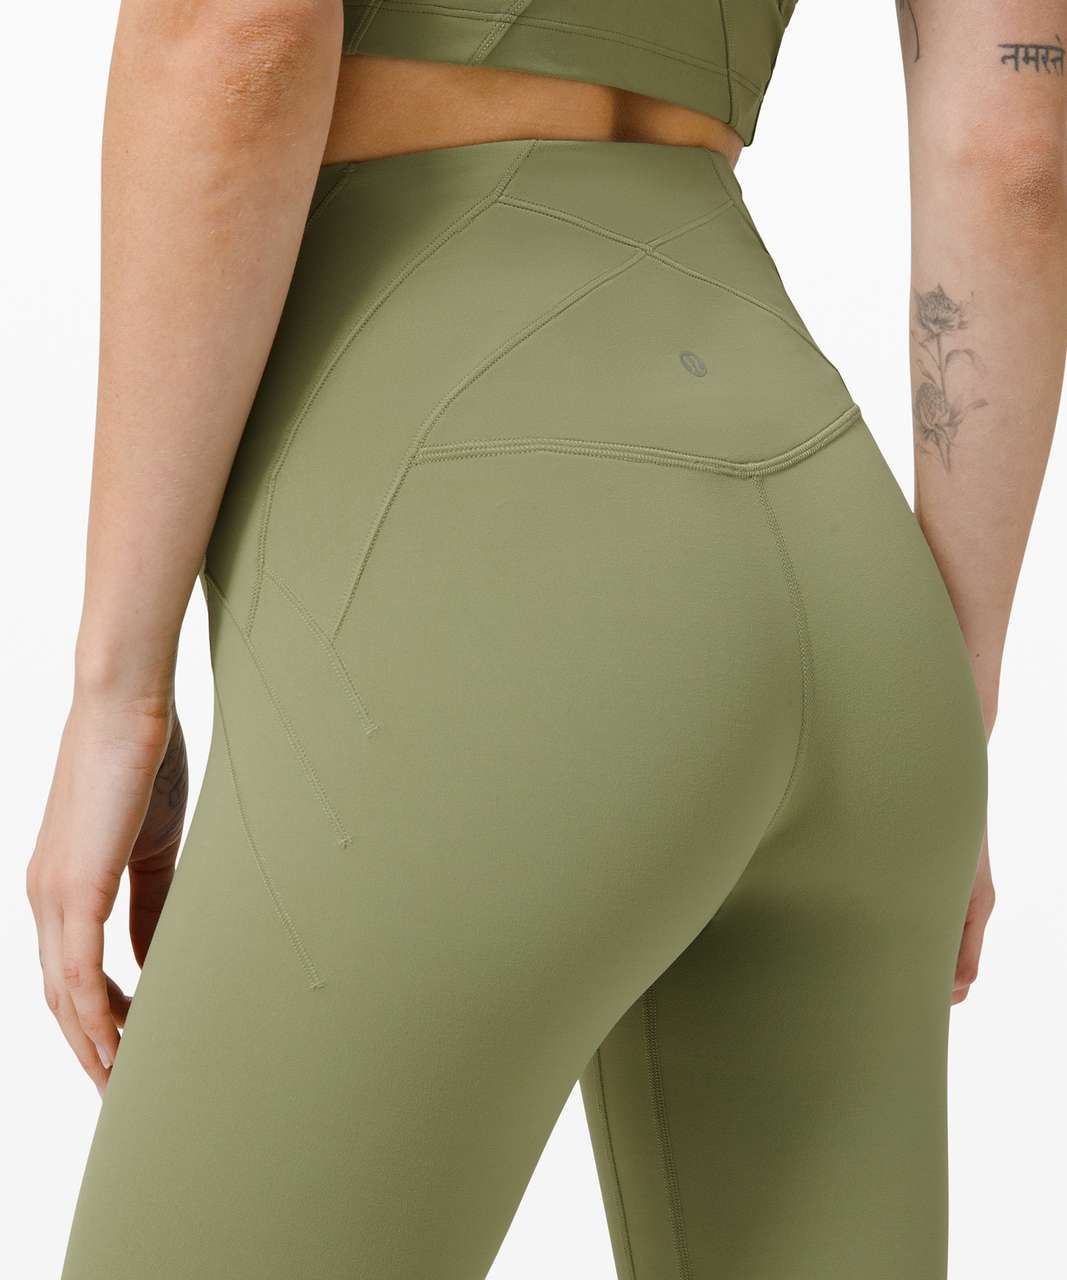 LULULEMON ZONE IN Tight Womens 6 Leggings Green Yoga Pants Seamless High  Rise $15.00 - PicClick